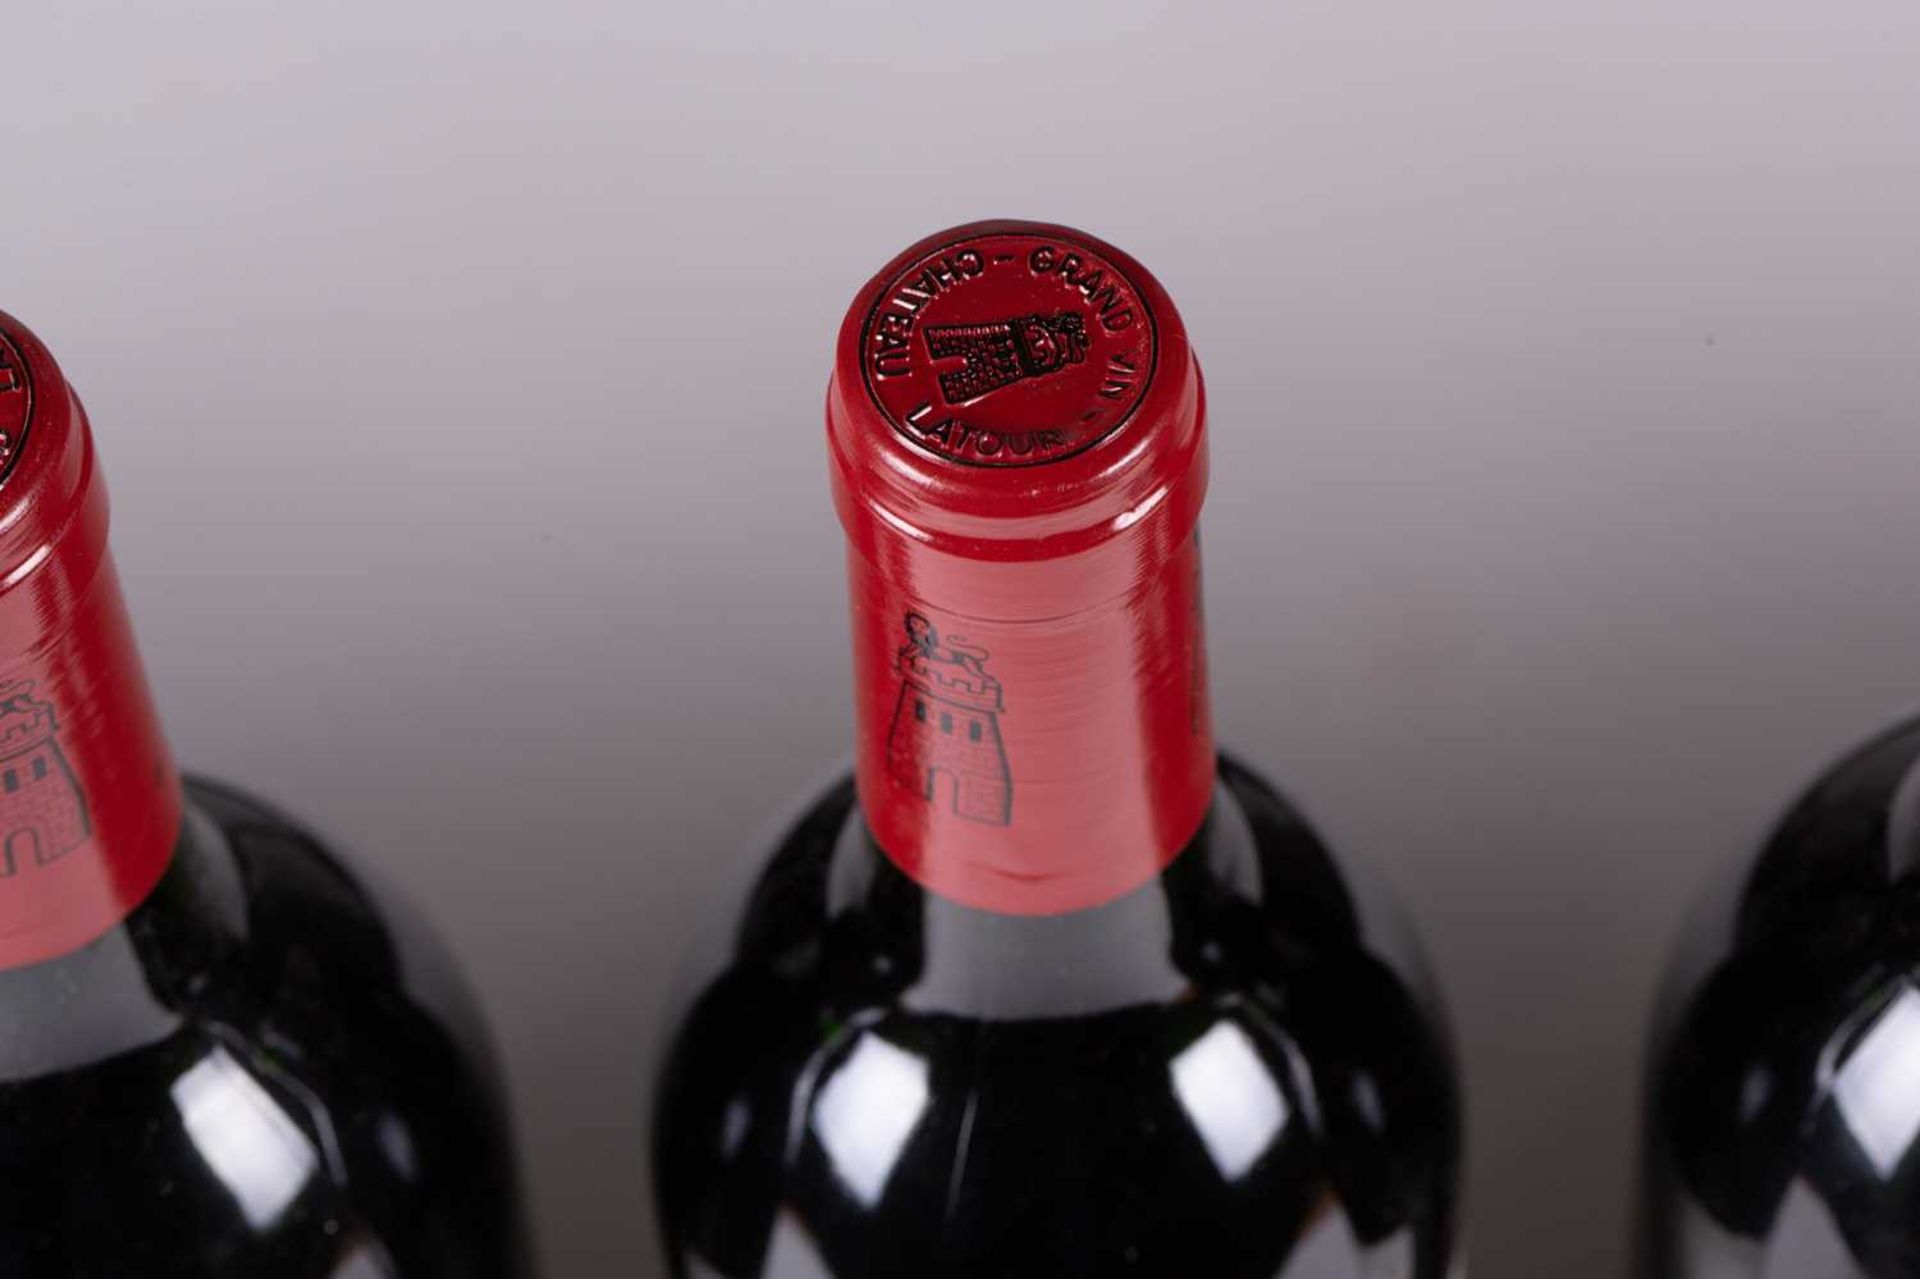 A twelve bottle case of Grand Vin de Chateau Latour, 1988, tissue wrapped bottles, ullage bottom - Image 13 of 21